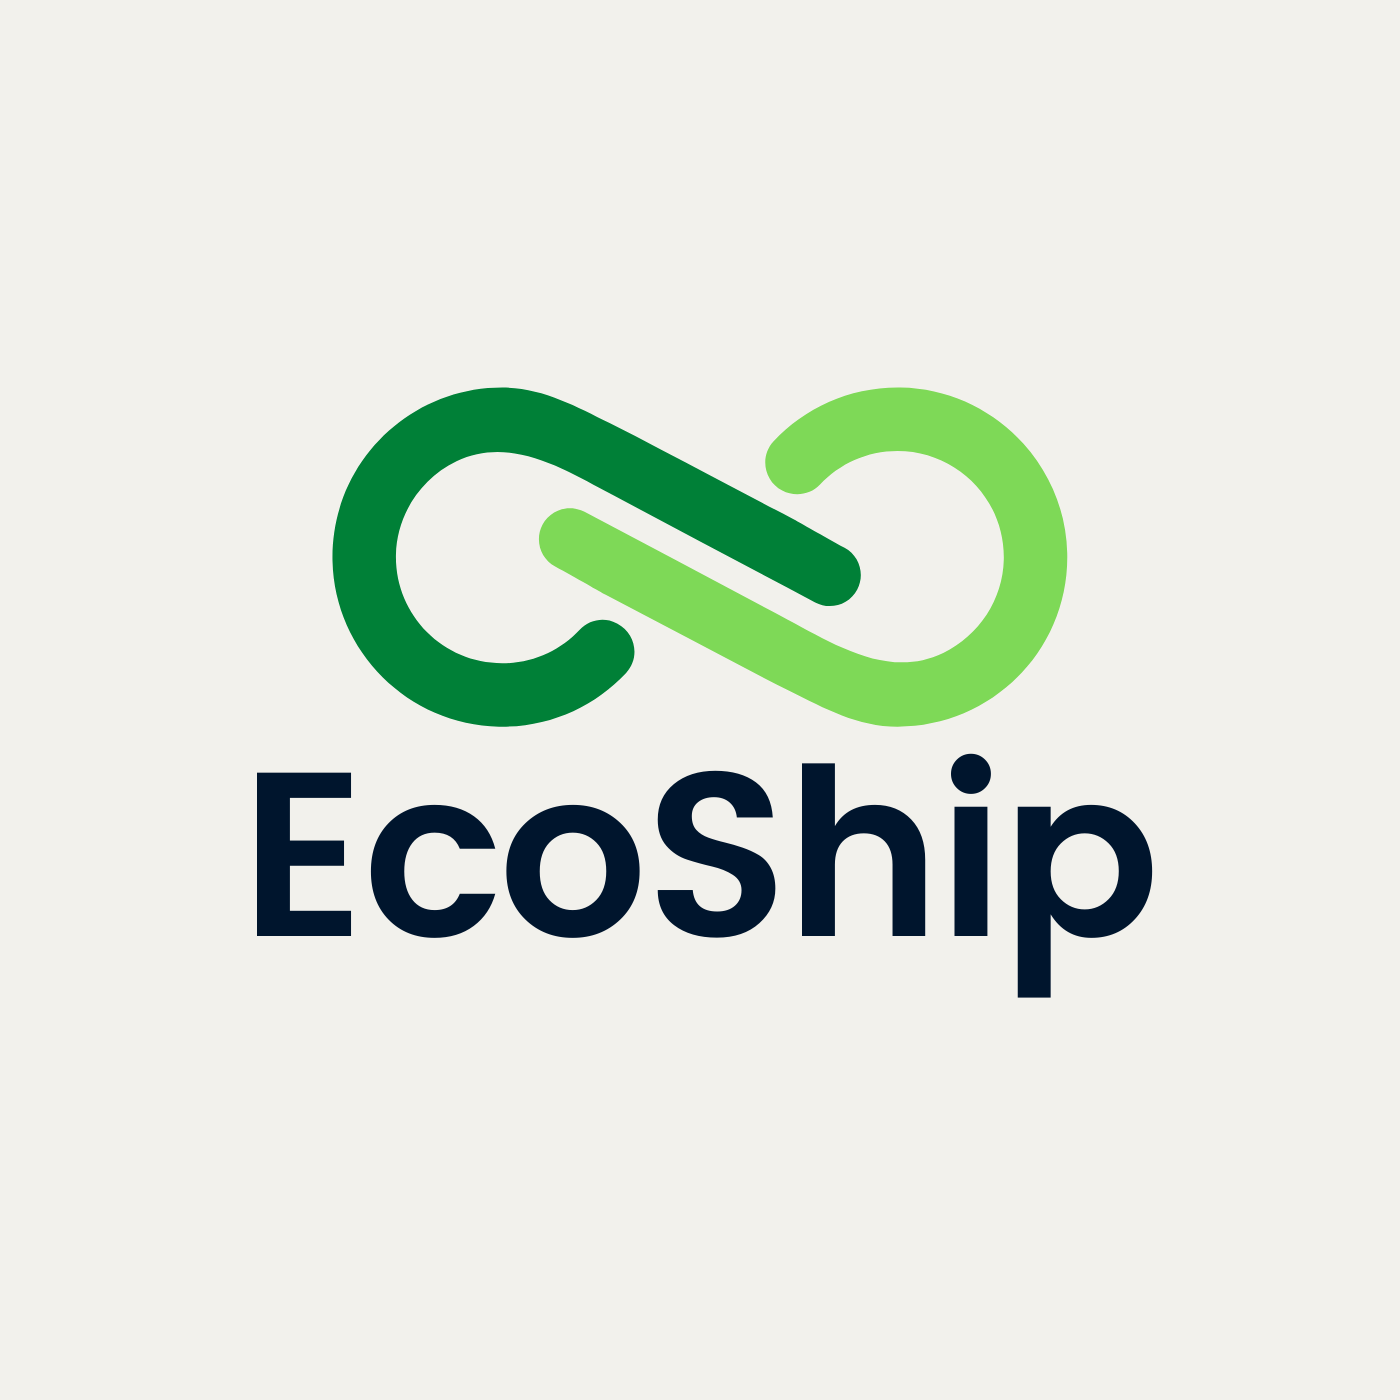 Ecoship NFP logo